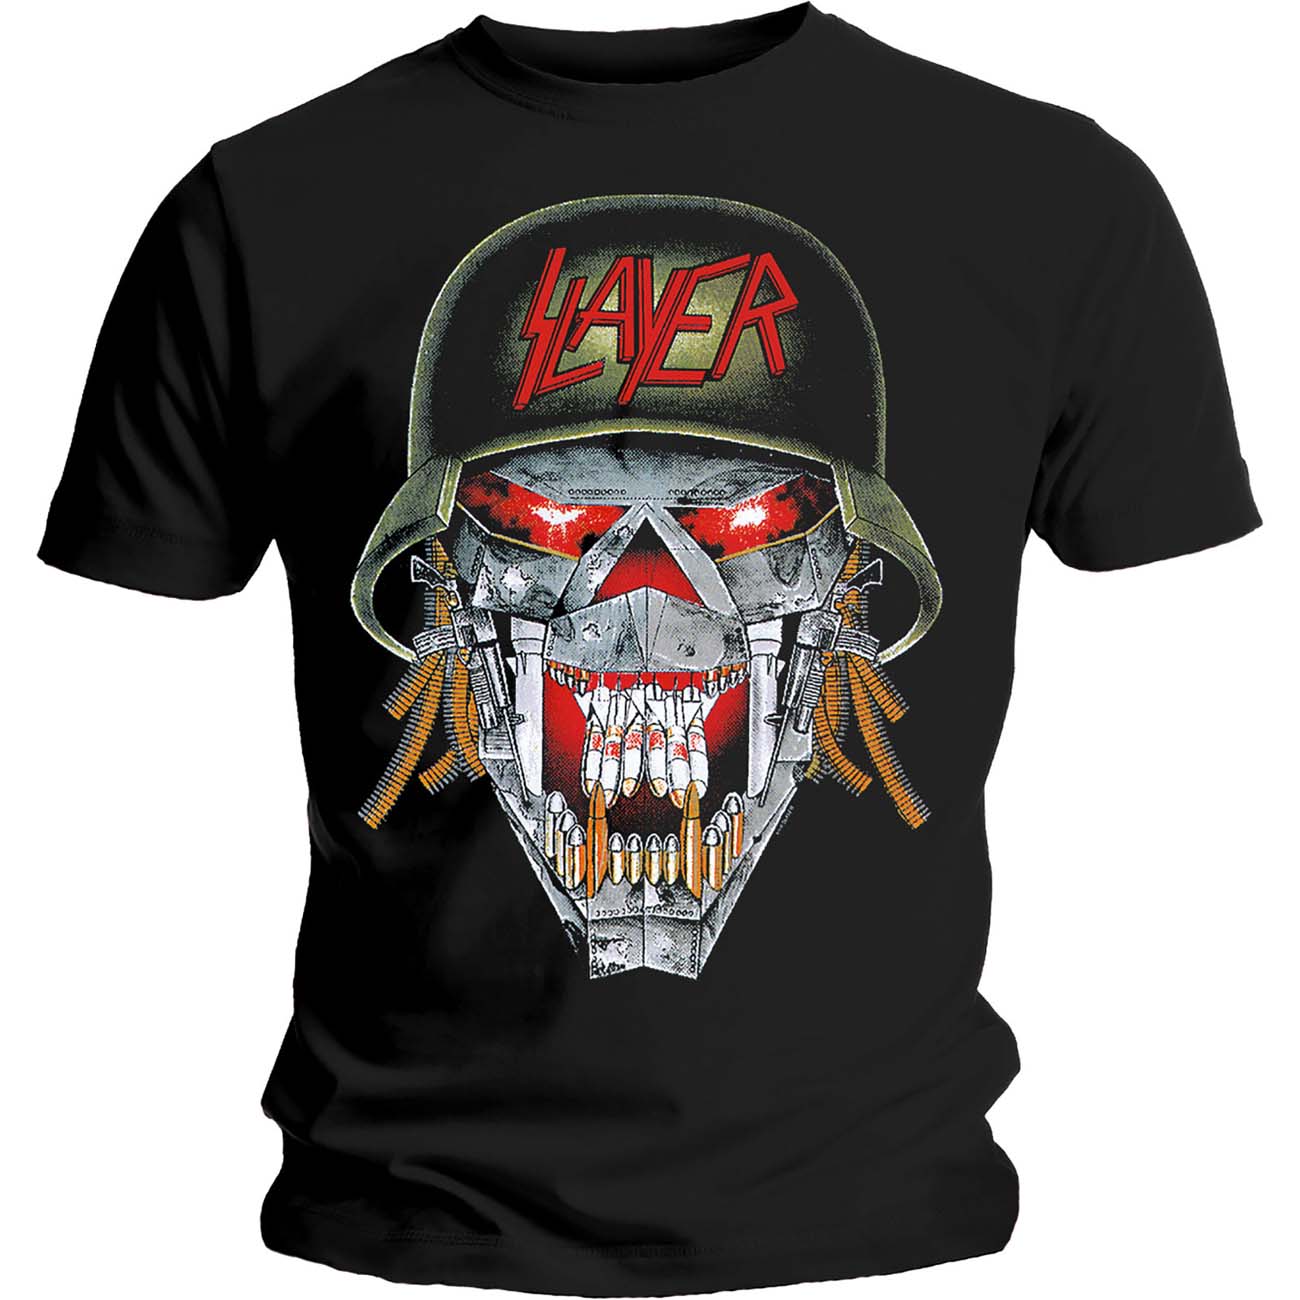 Slayer T-Shirt: War Ensemble